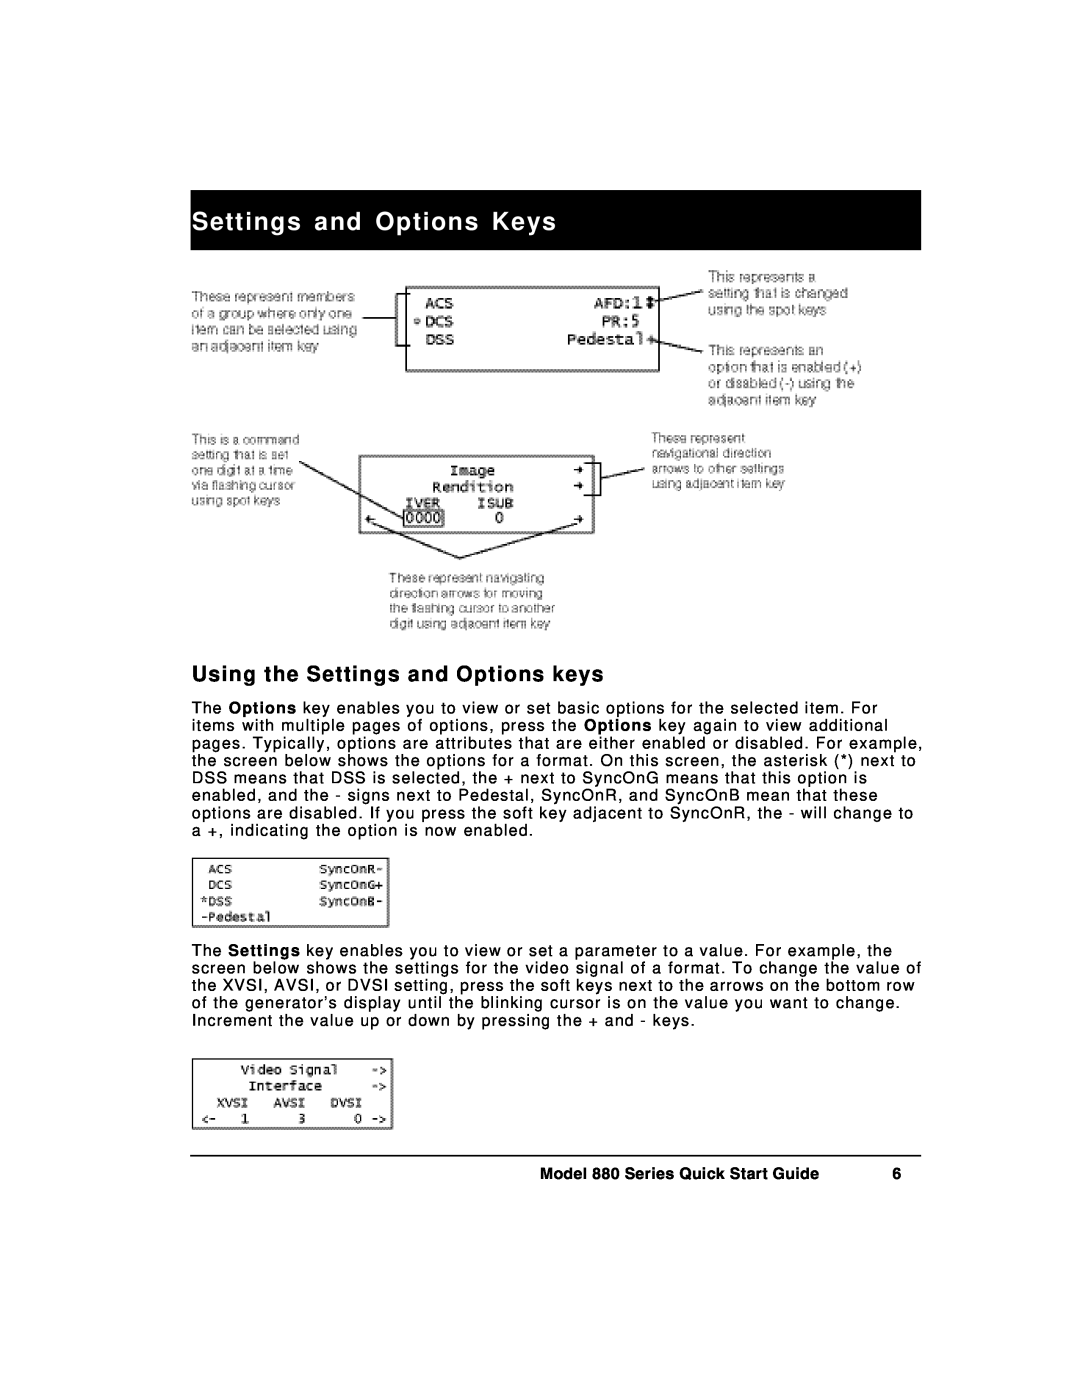 Quantum Data Settings and Options Keys, Using the Settings and Options keys, Model 880 Series Quick Start Guide 